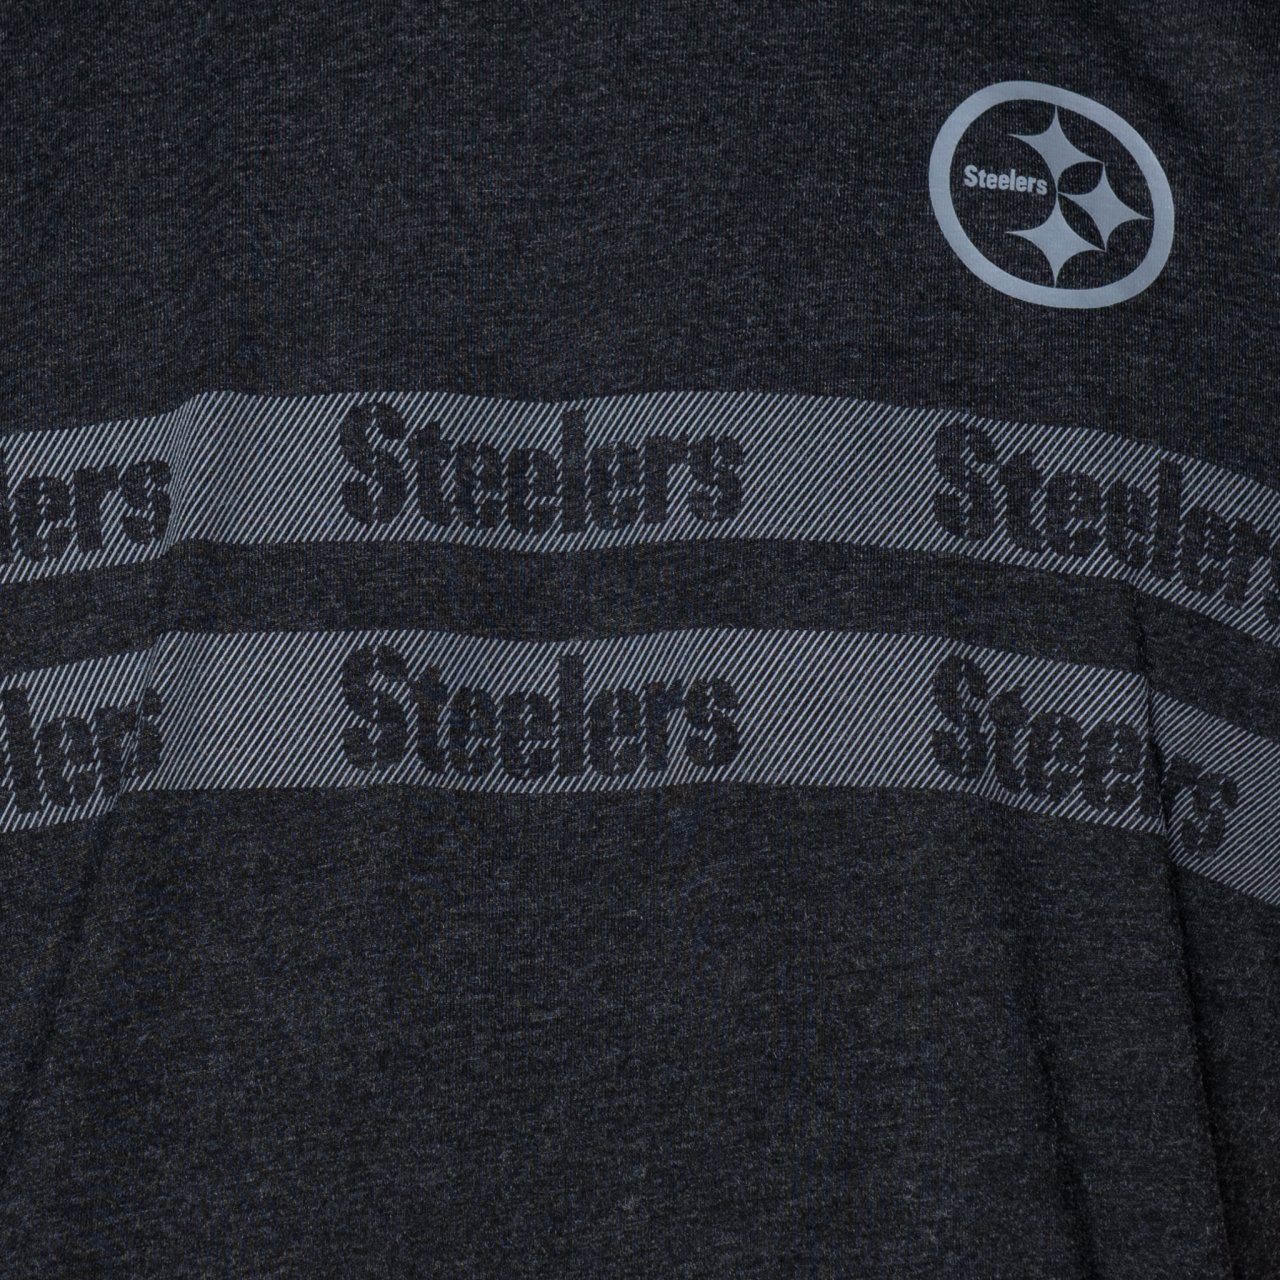 New Print-Shirt STRIPED Steelers Era Pittsburgh heather